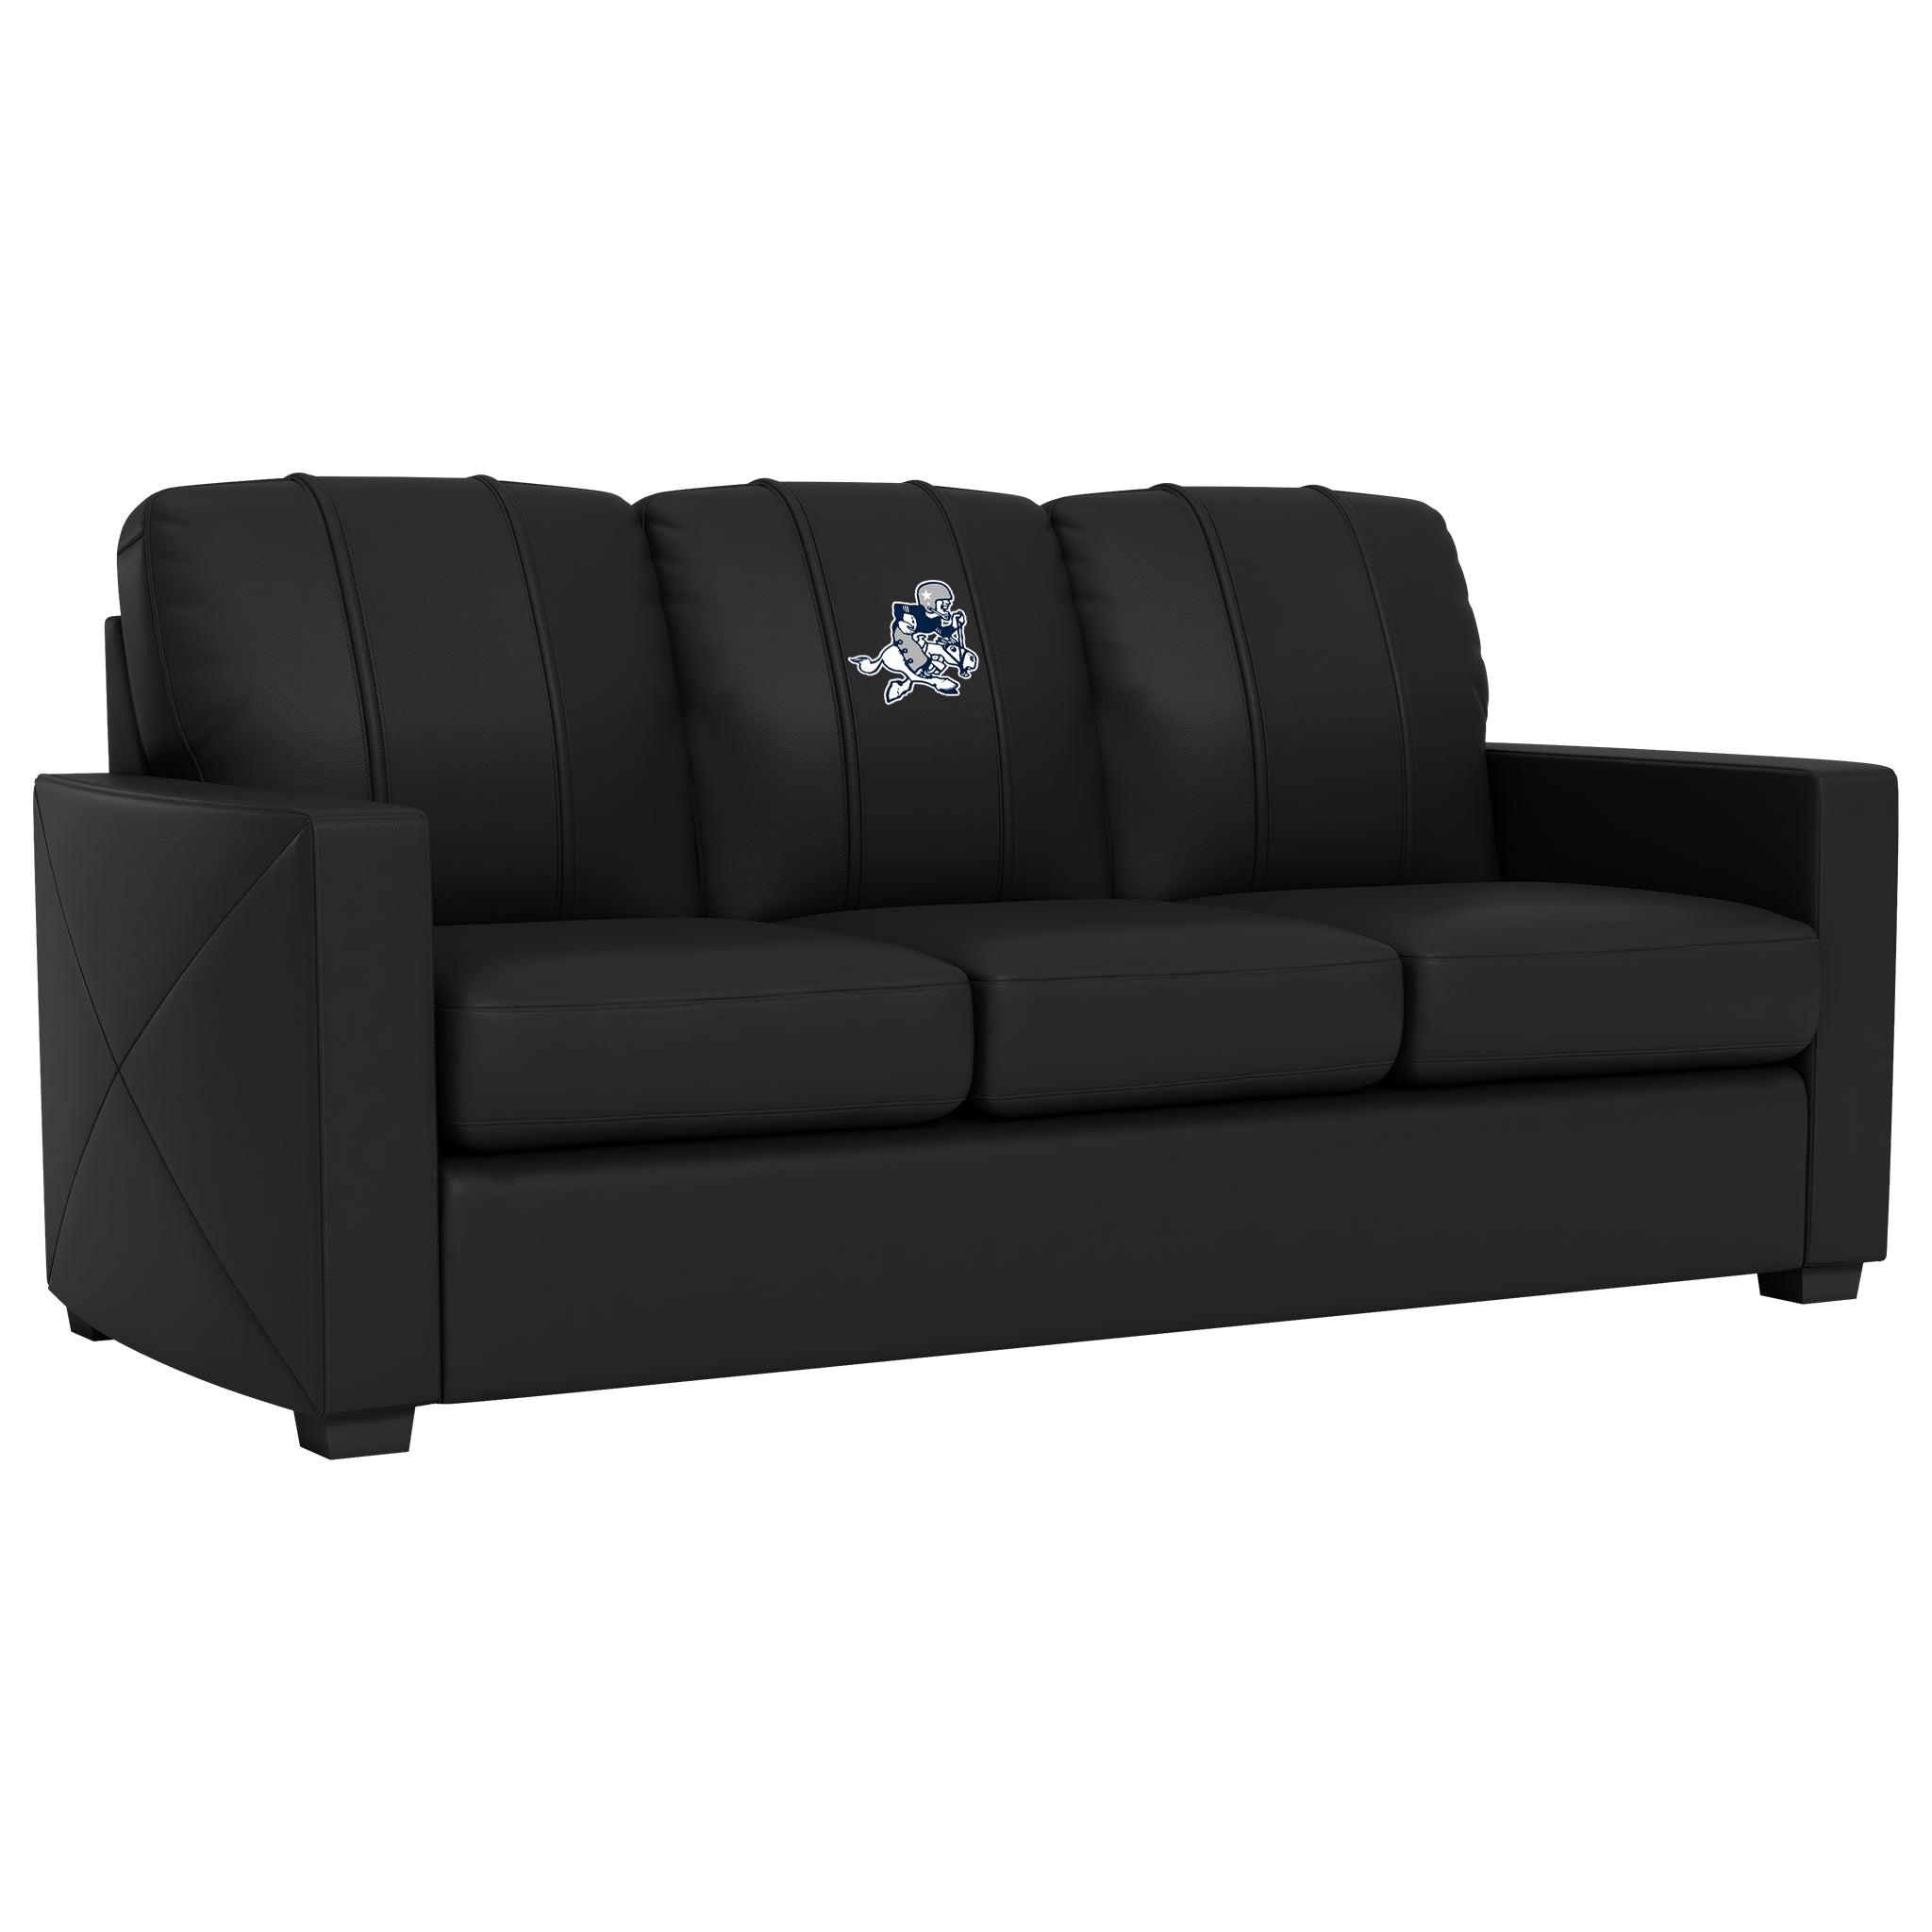 Silver Sofa with Dallas Cowboys Classic Logo